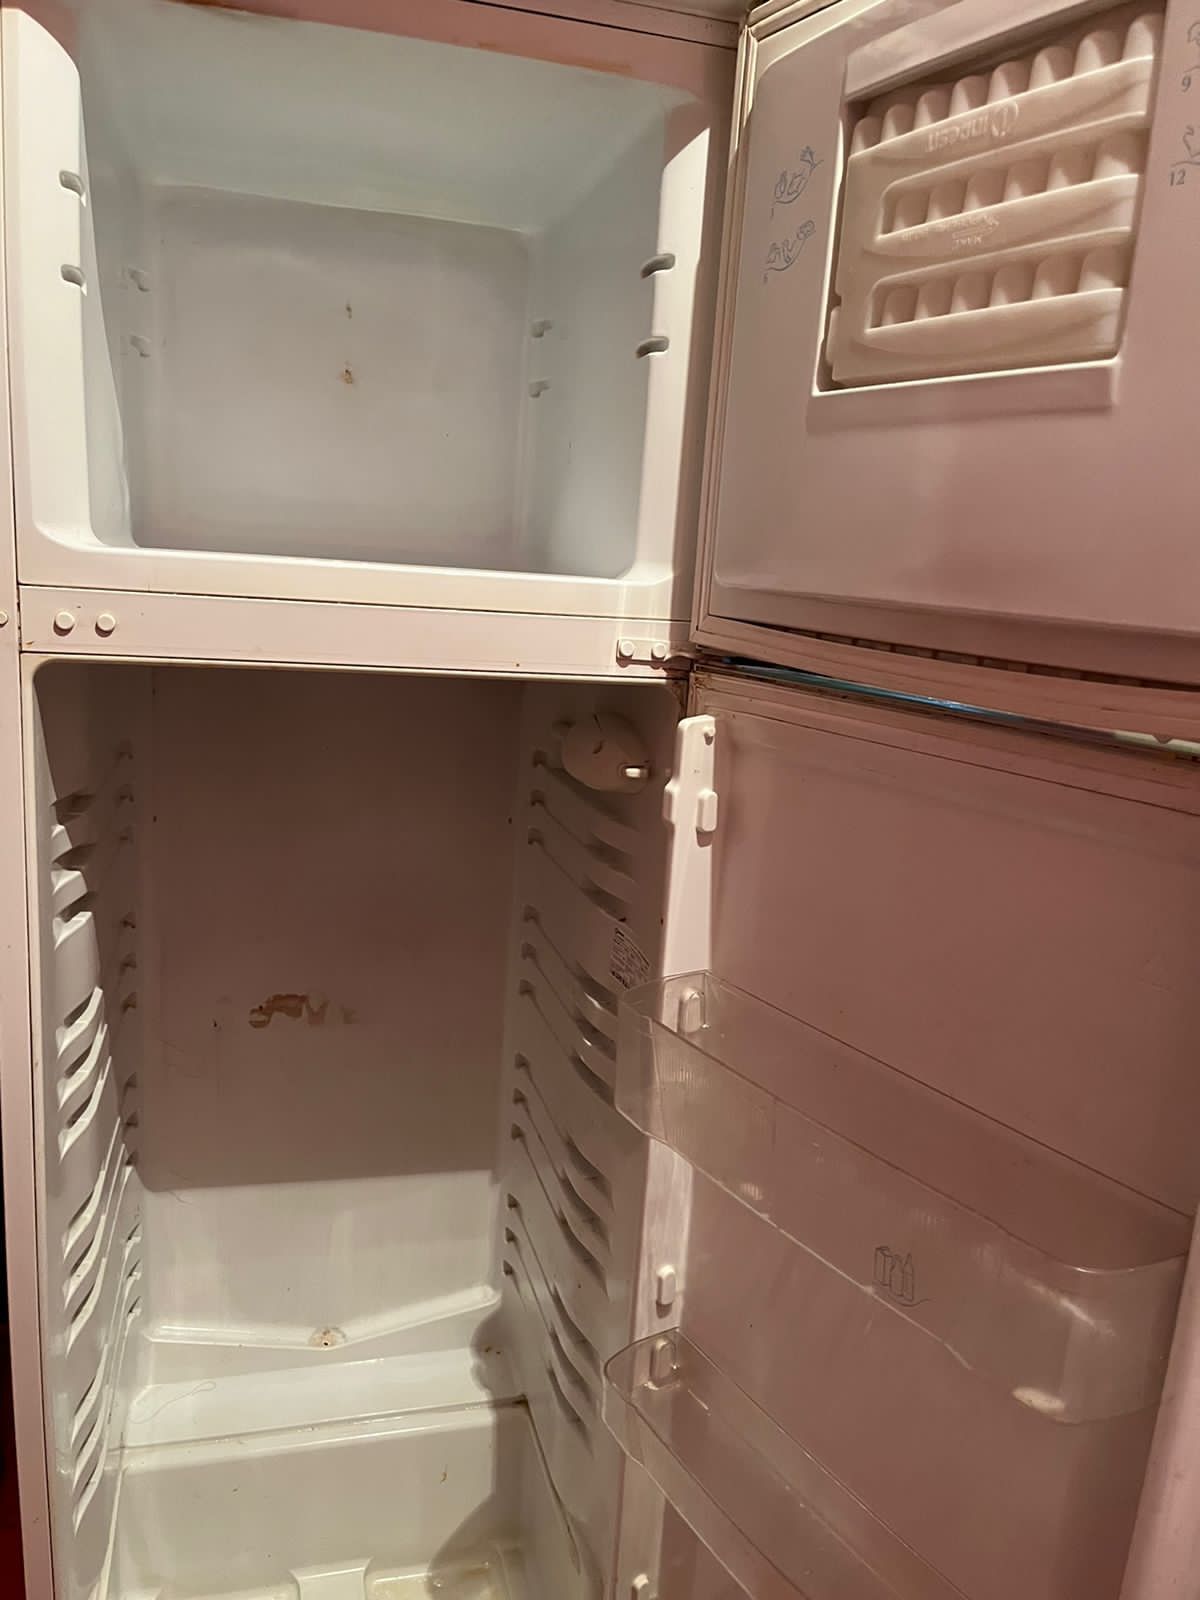 Indesit холодильник